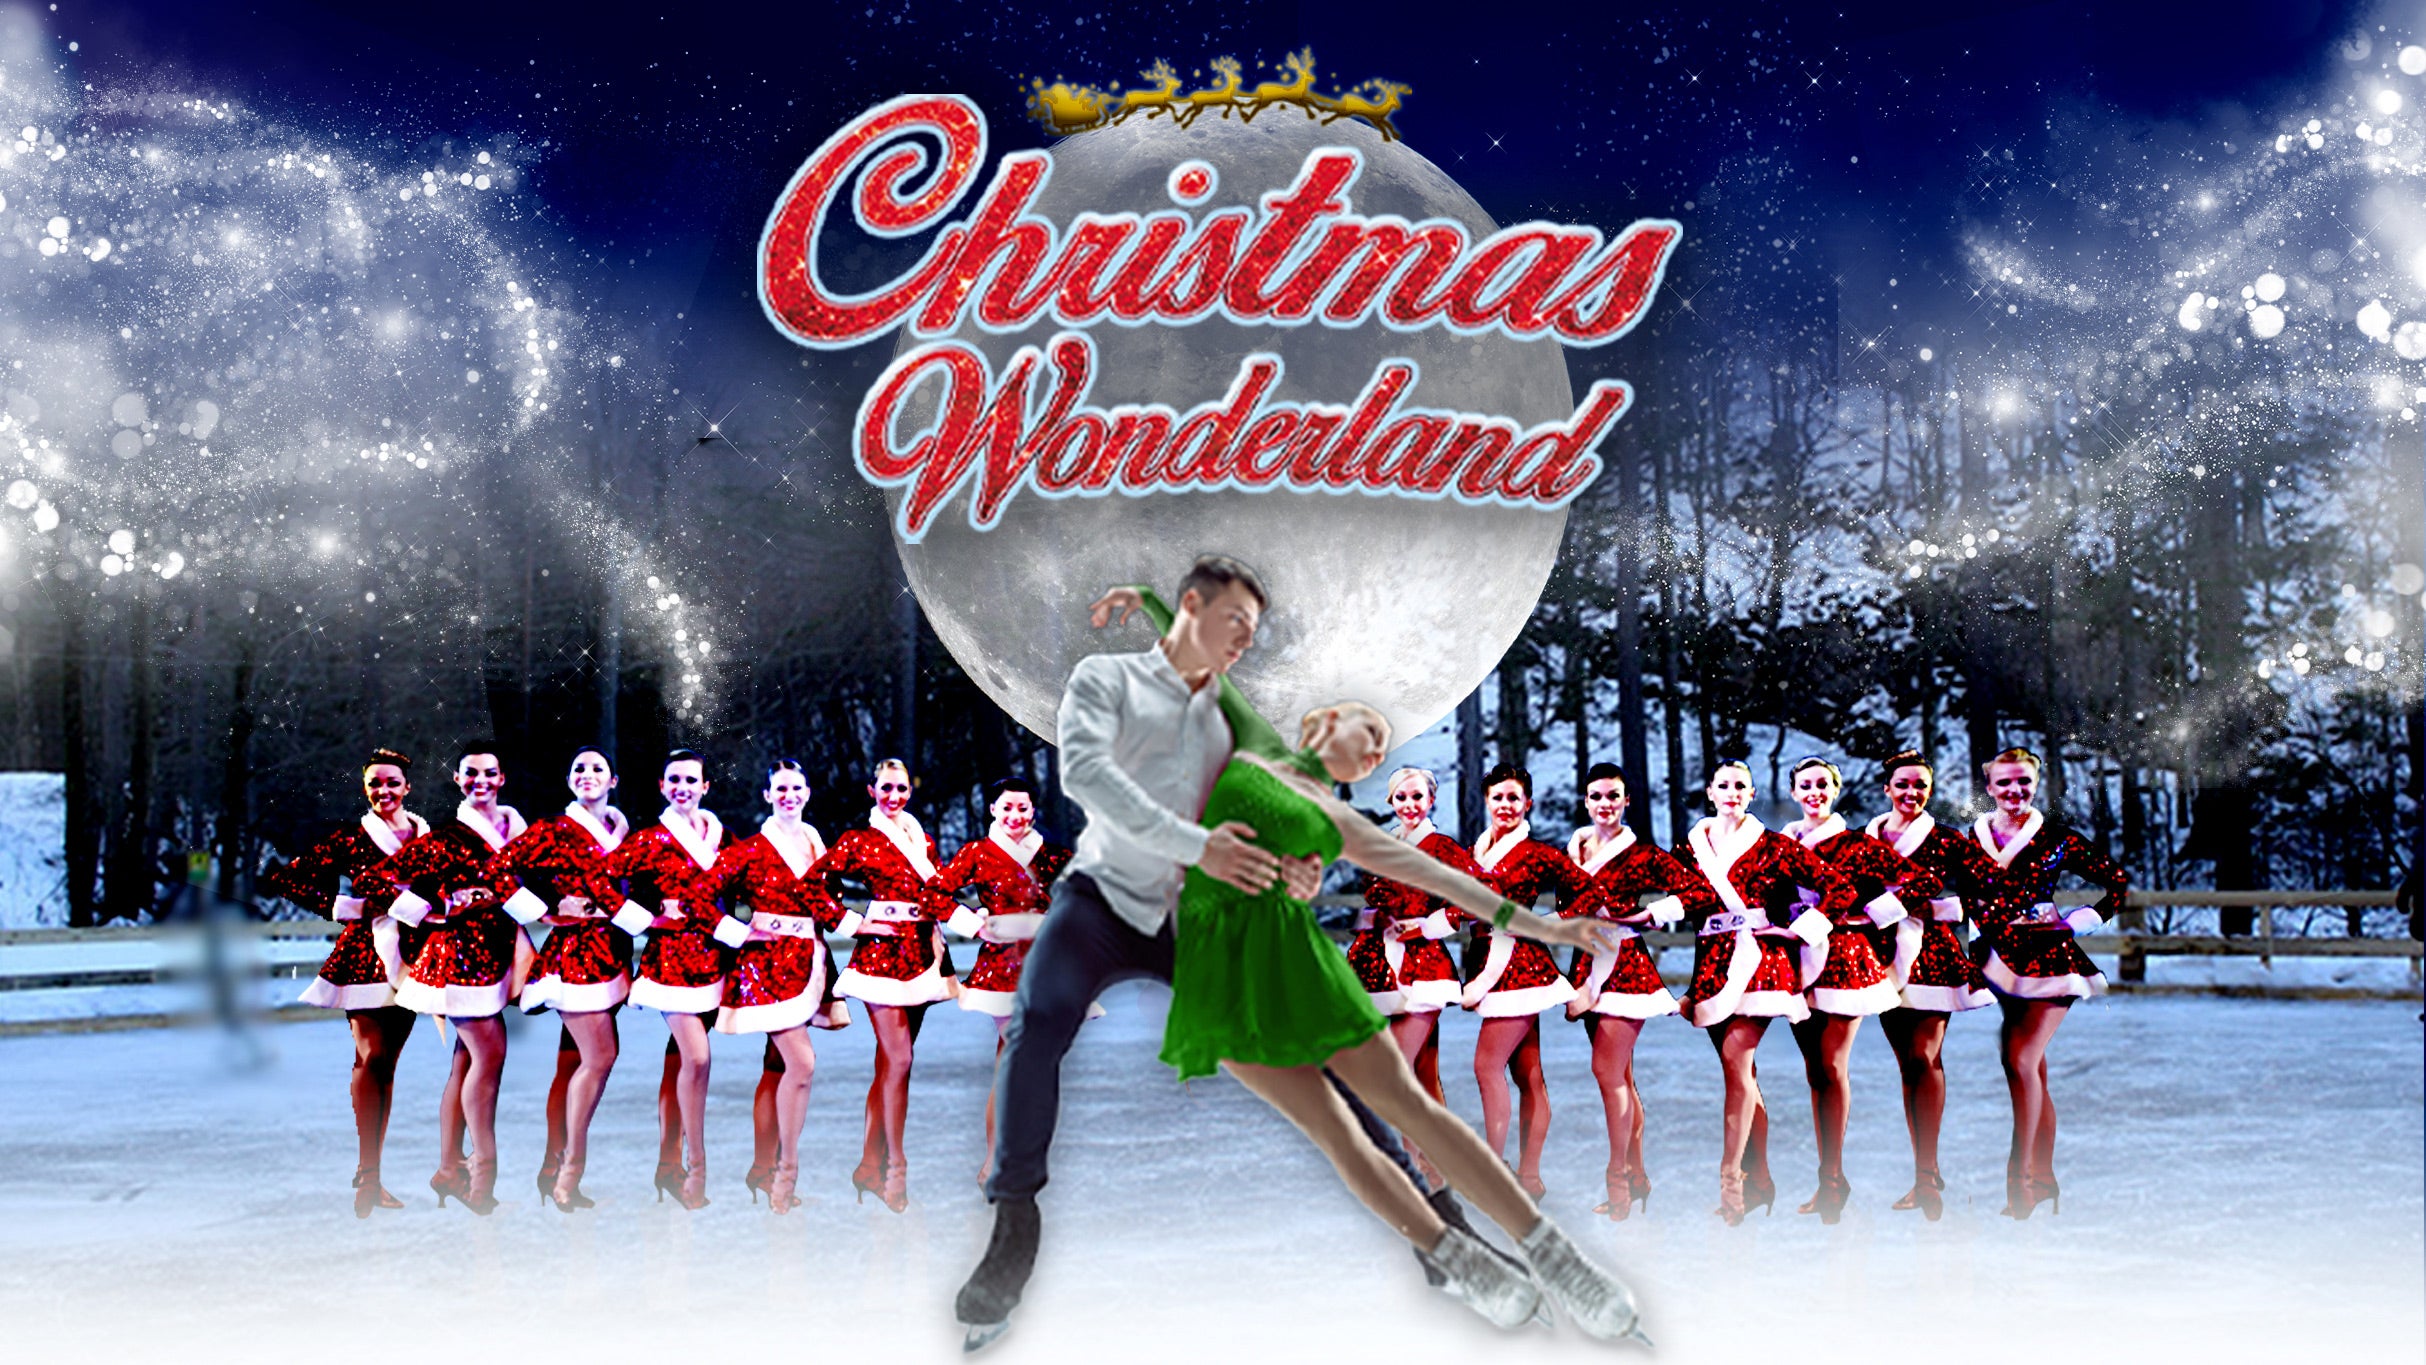 Christmas Wonderland in Reno promo photo for Partner presale offer code